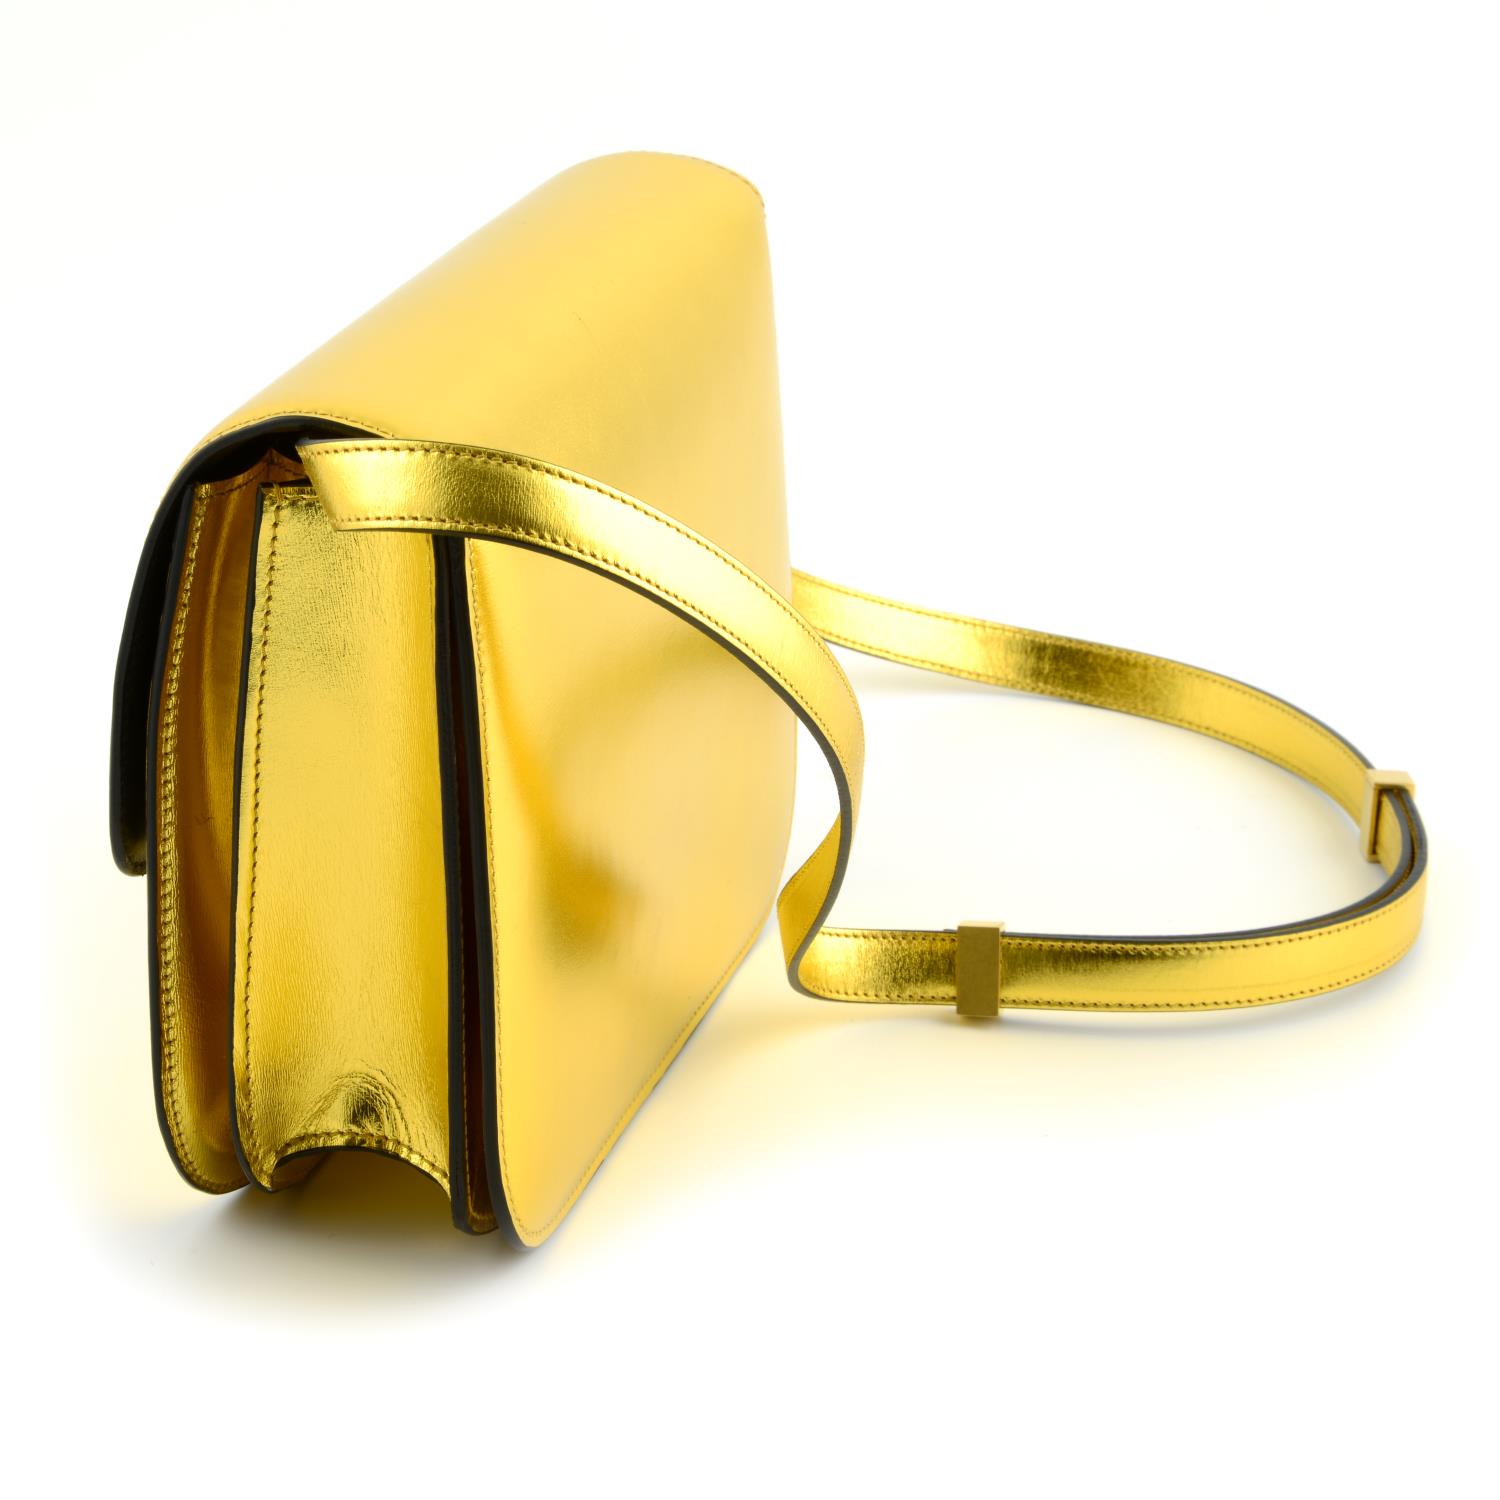 CÉLINE - a metallic gold Box handbag. - Image 3 of 9